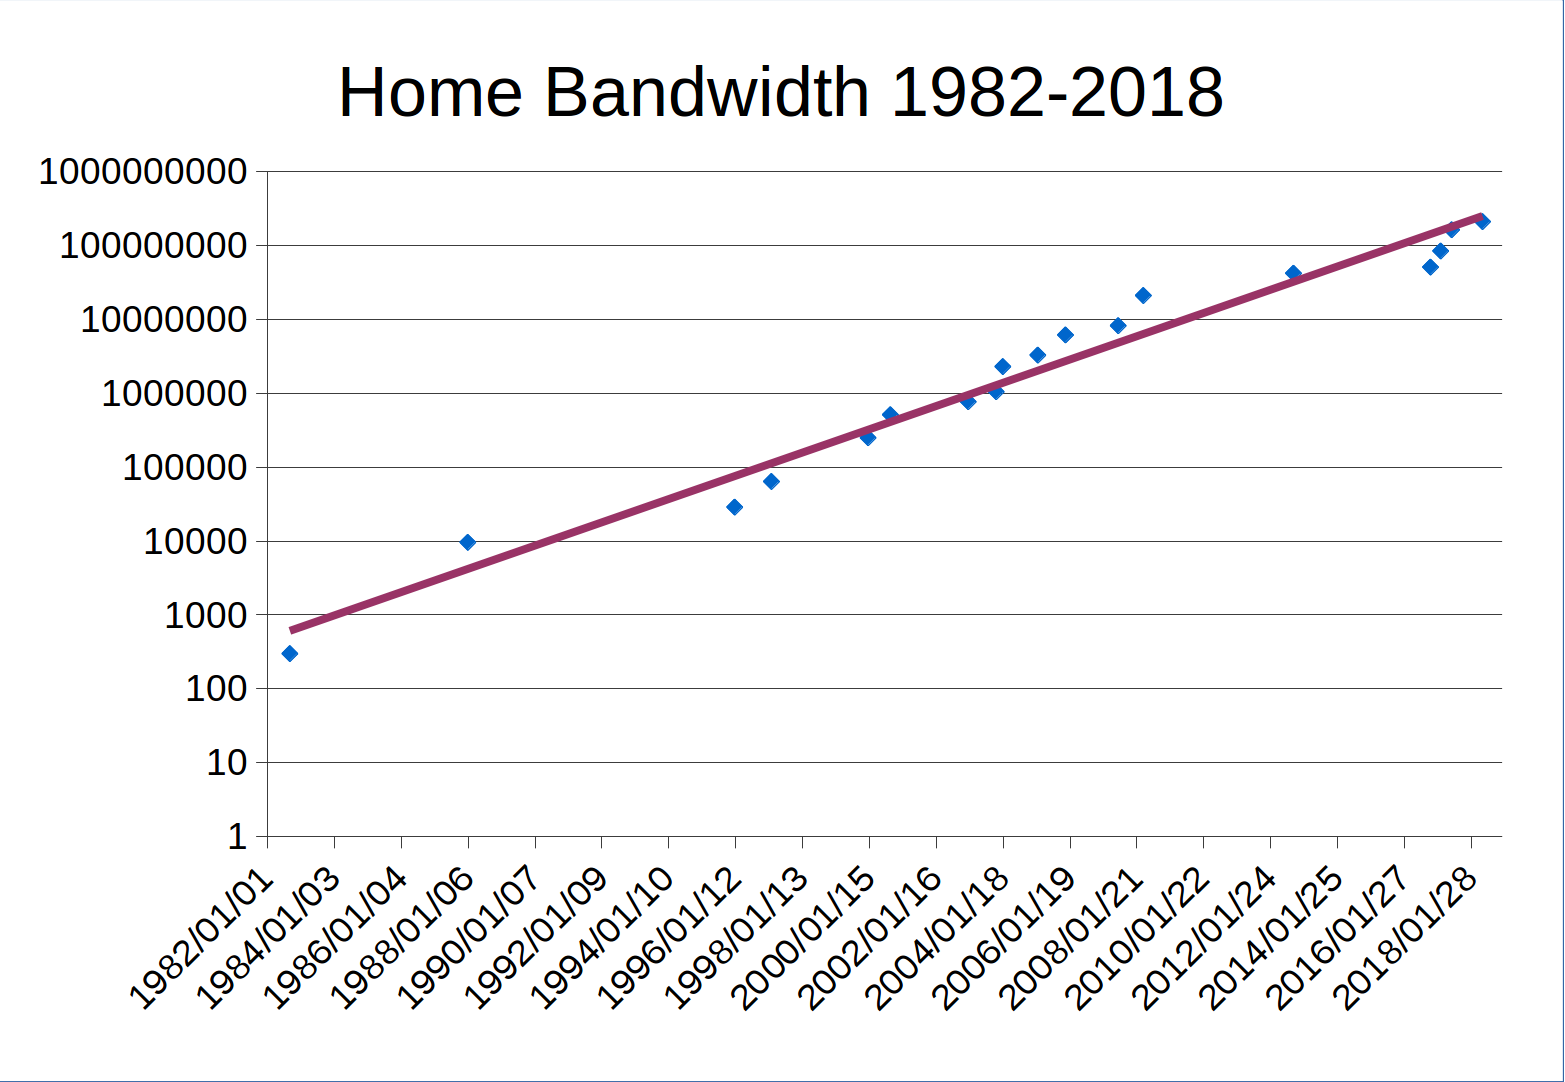 Bandwidth on a log scale